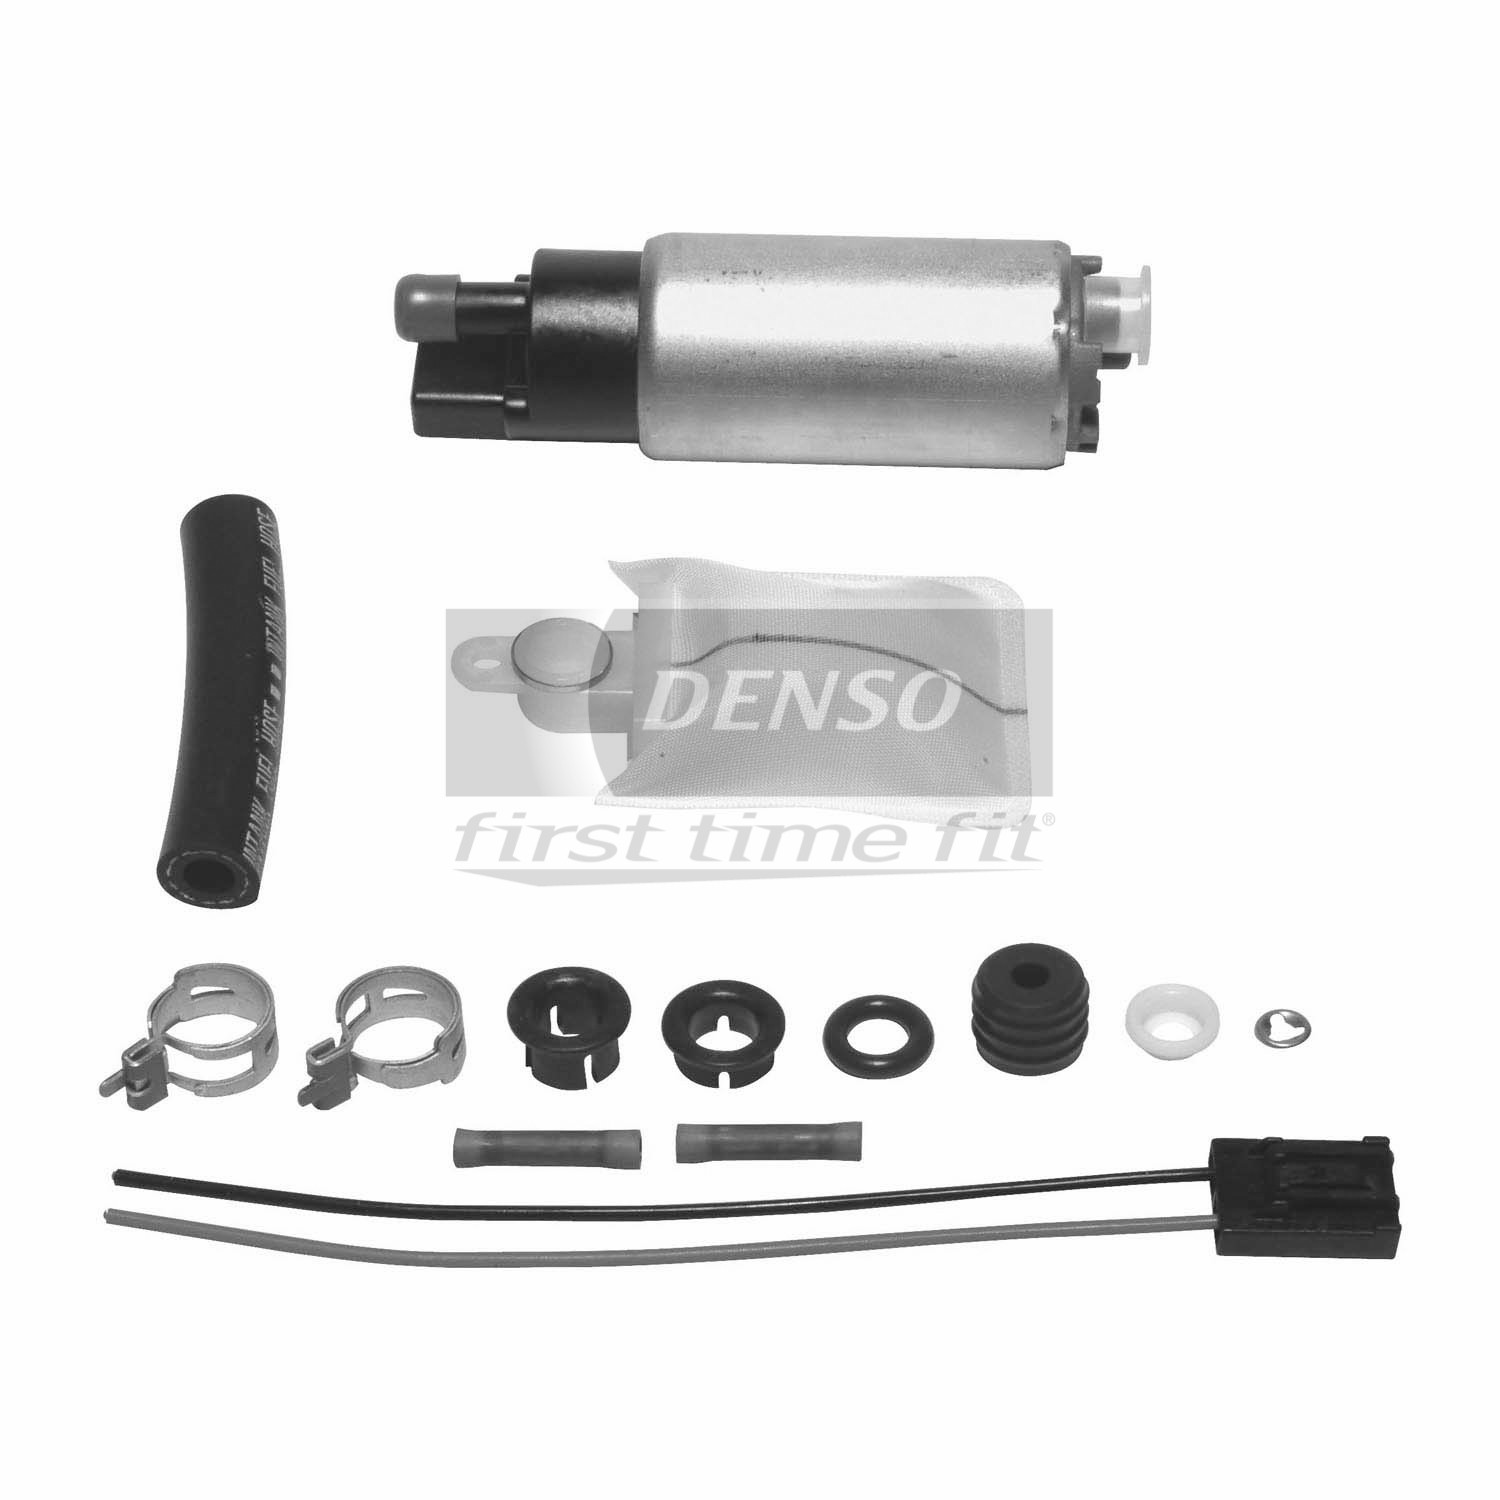 Image of ID 9500125 Denso 9500125 Fuel Pump and Strainer Set Fits 1995-2000 Chrysler Sebring